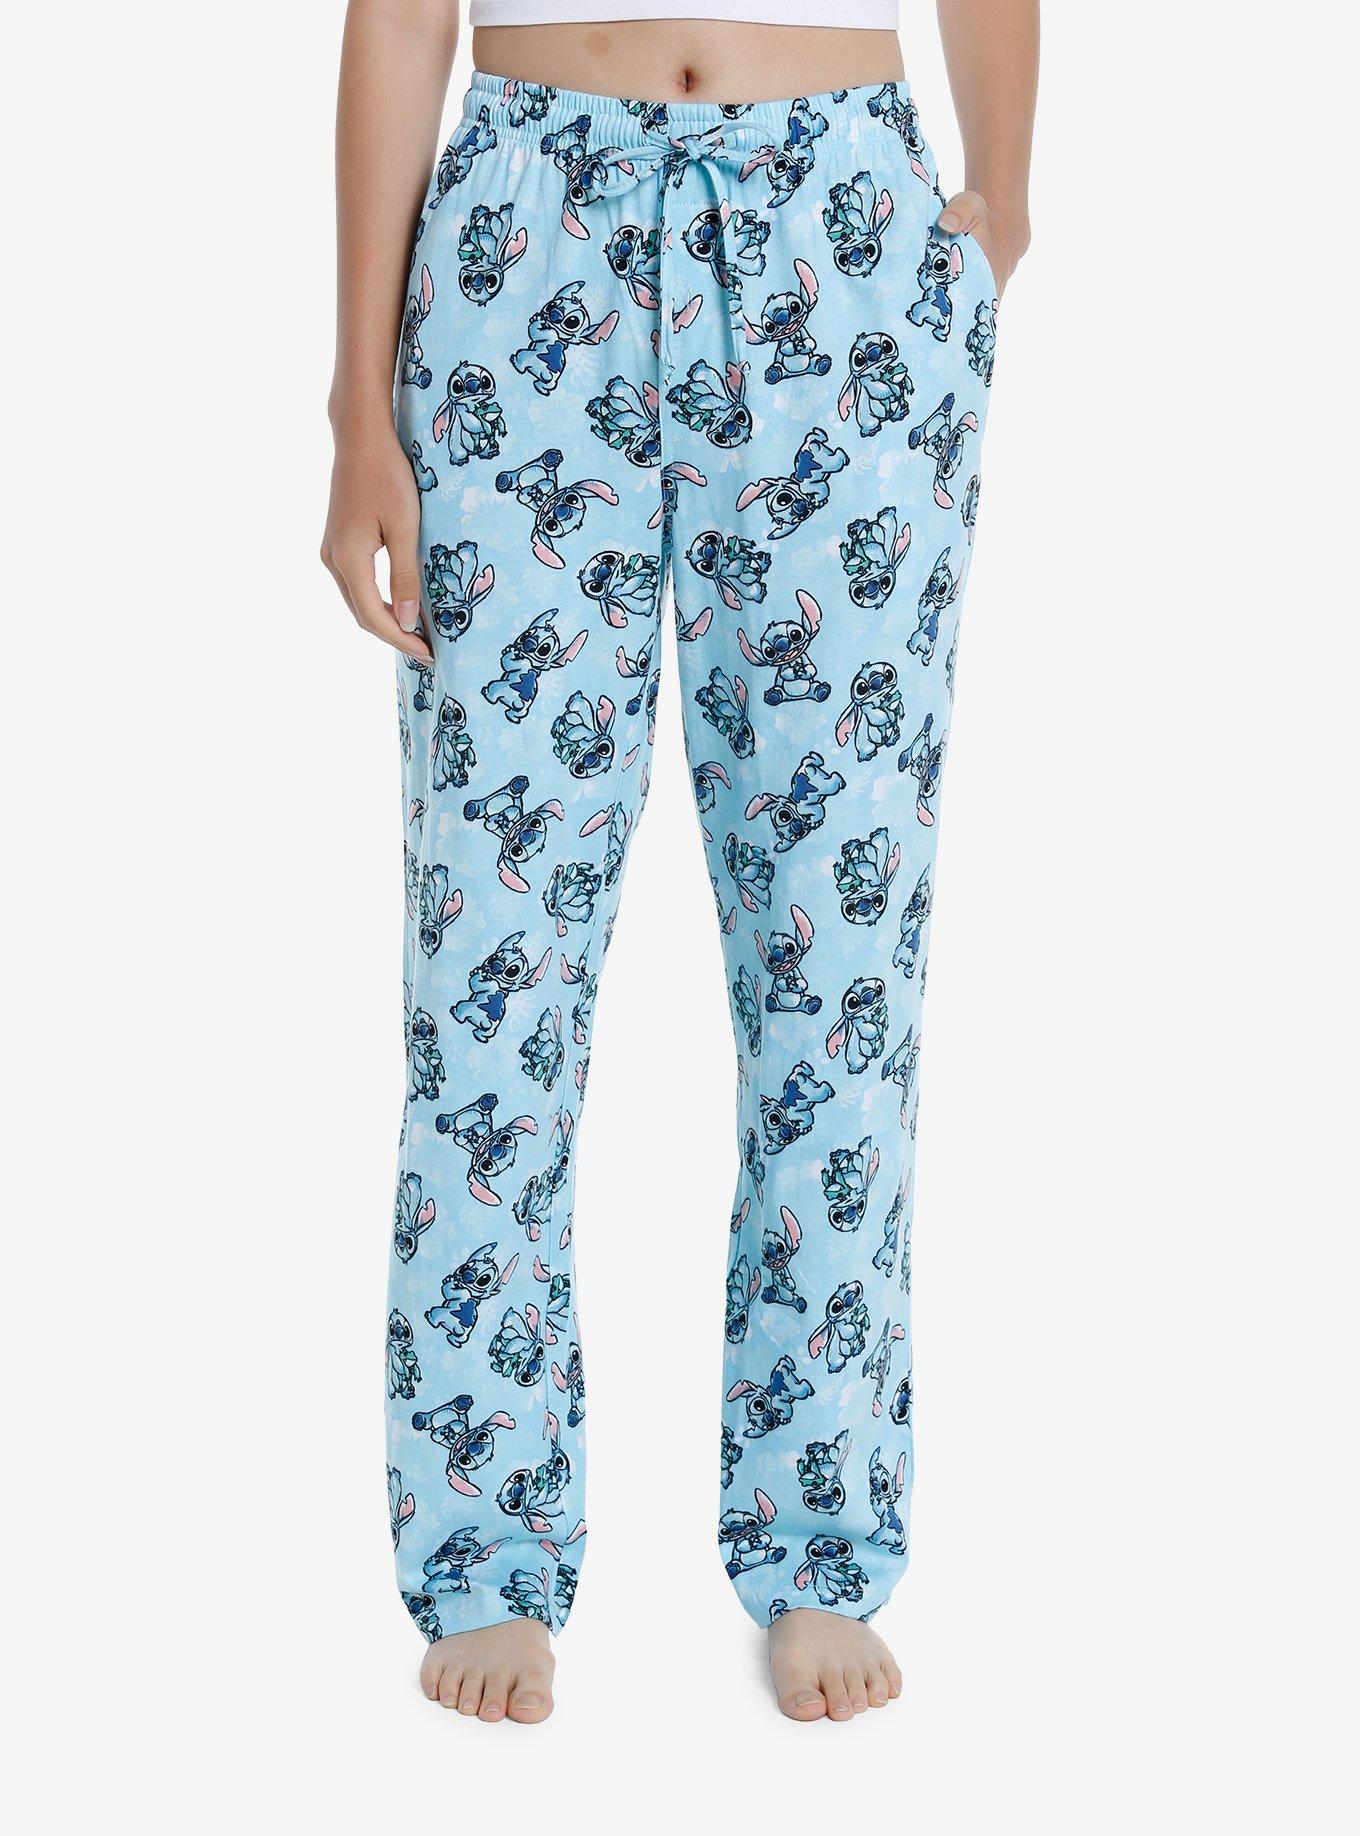 Sleep Shorts For Women Cute Flat Owl Pajama Shorts With Pockets